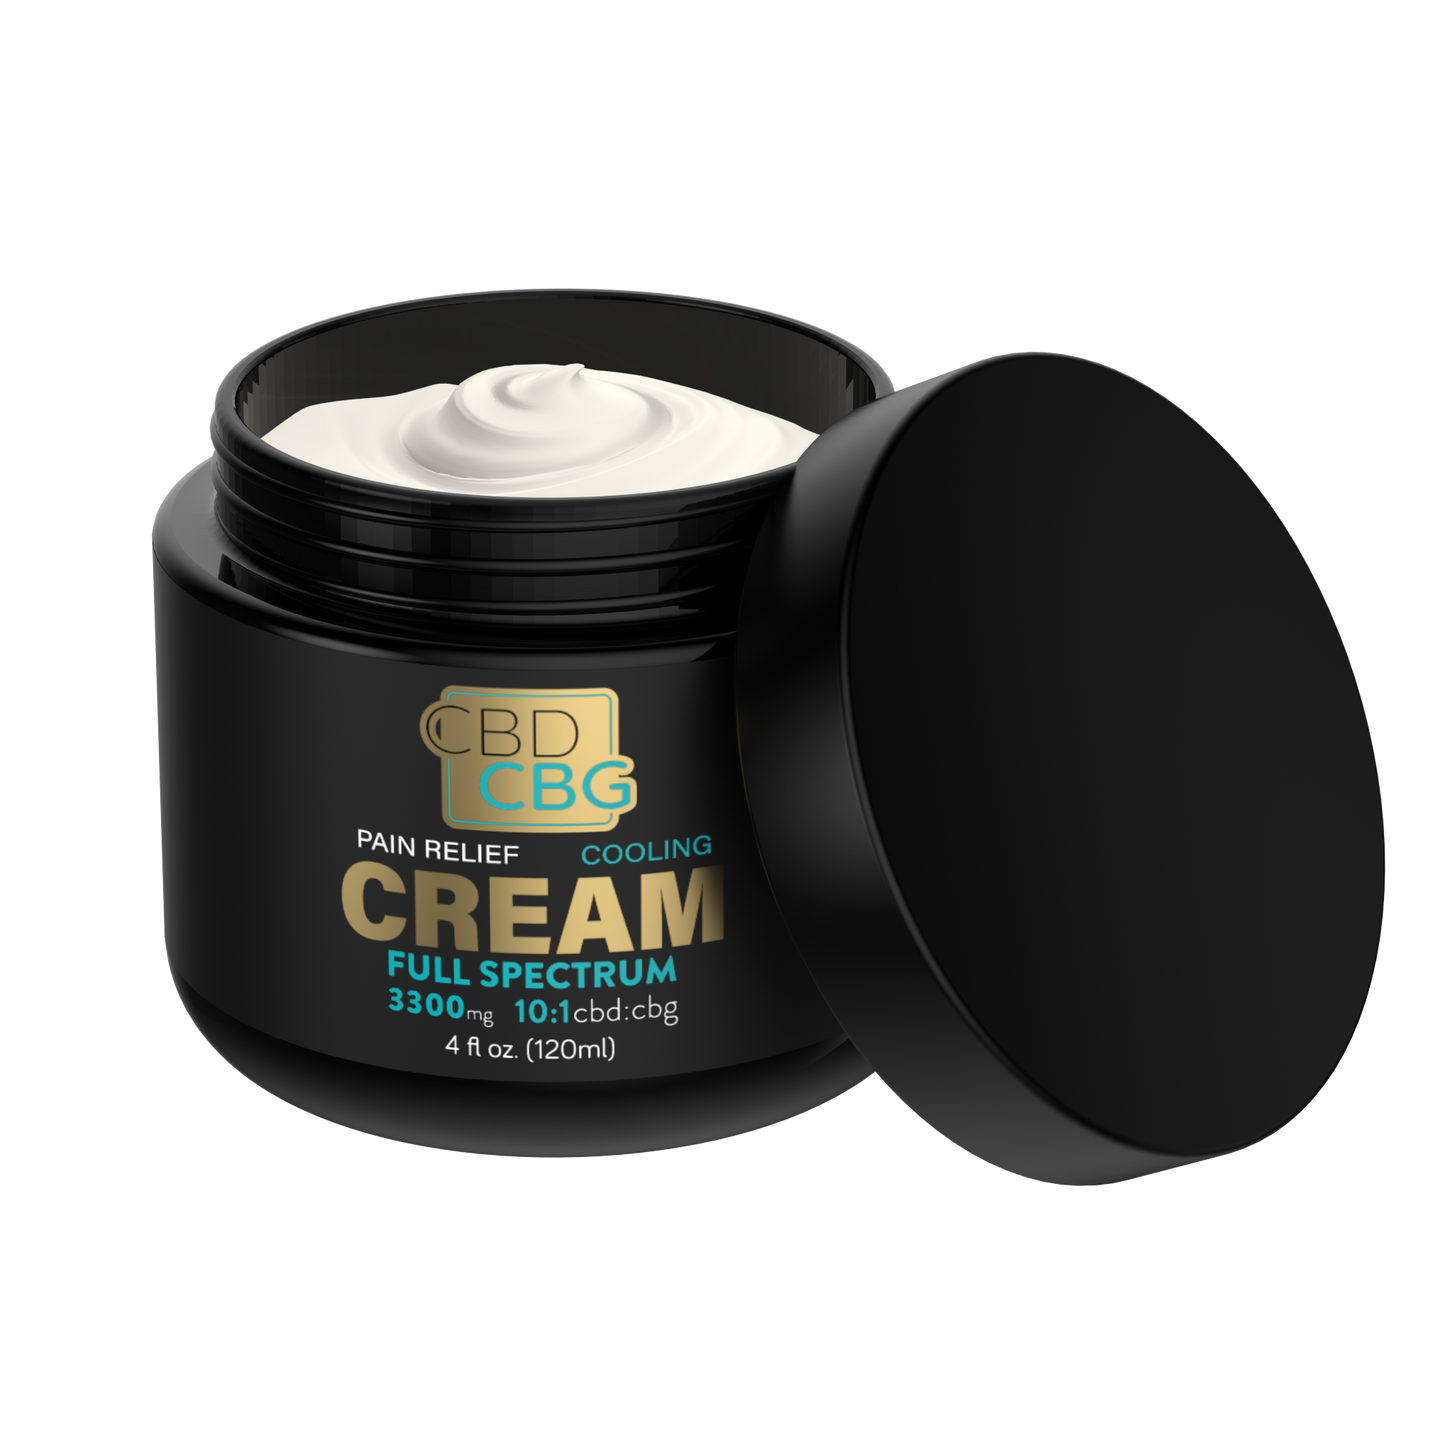 Full Spectrum CBD CBG Pain Relief Cream - 3300mg Cooling Menthol